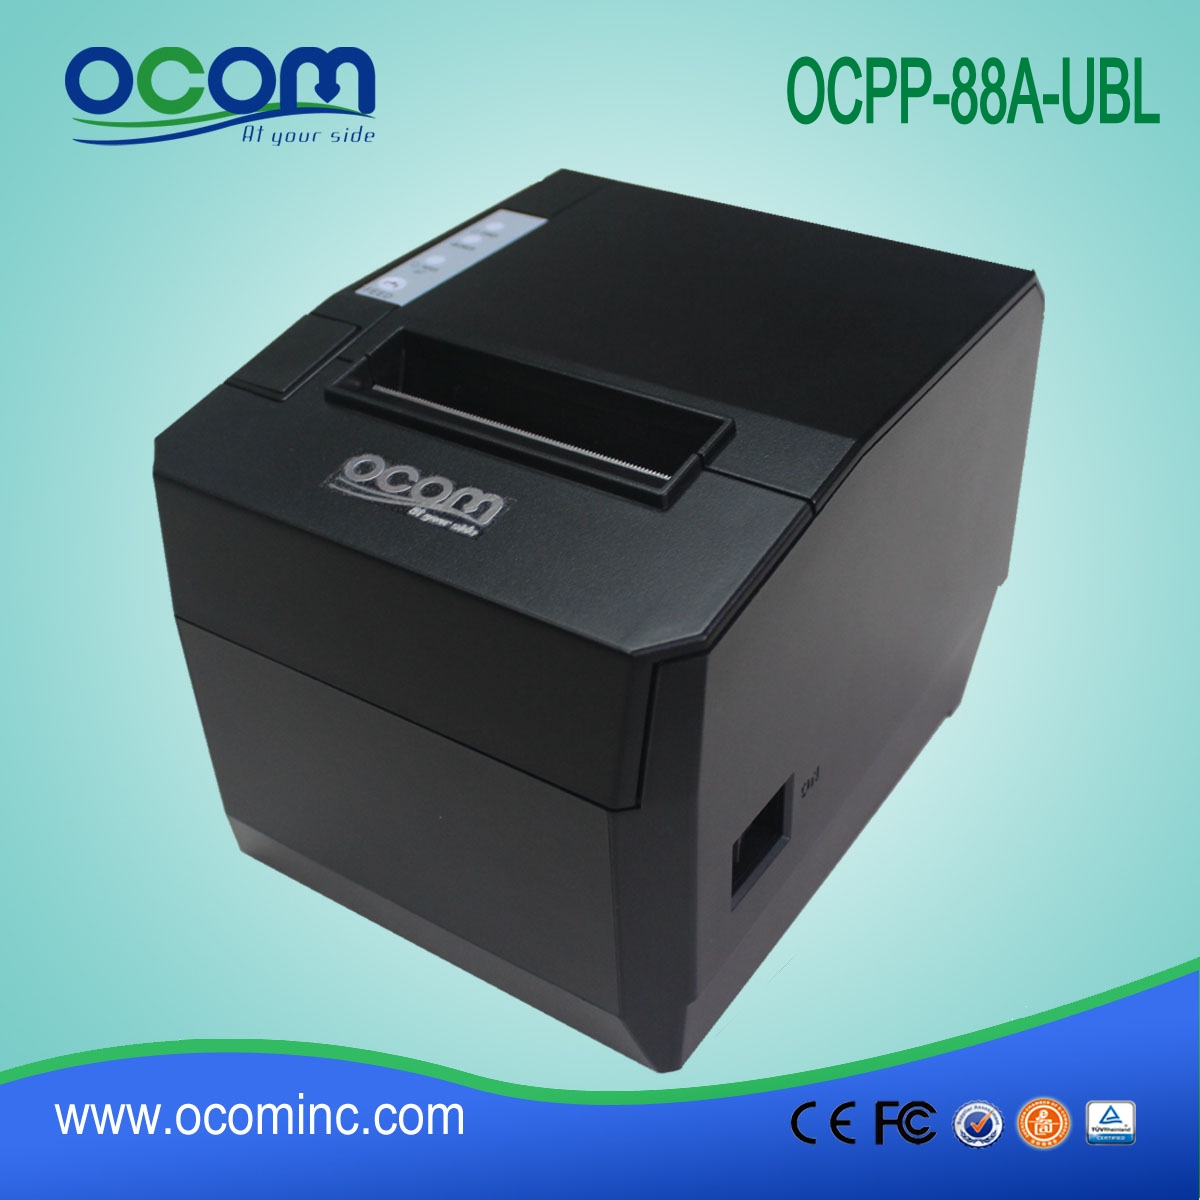 OCPP -88A auto cutter 80mm loterij ticket ontvangst thermische pos printer